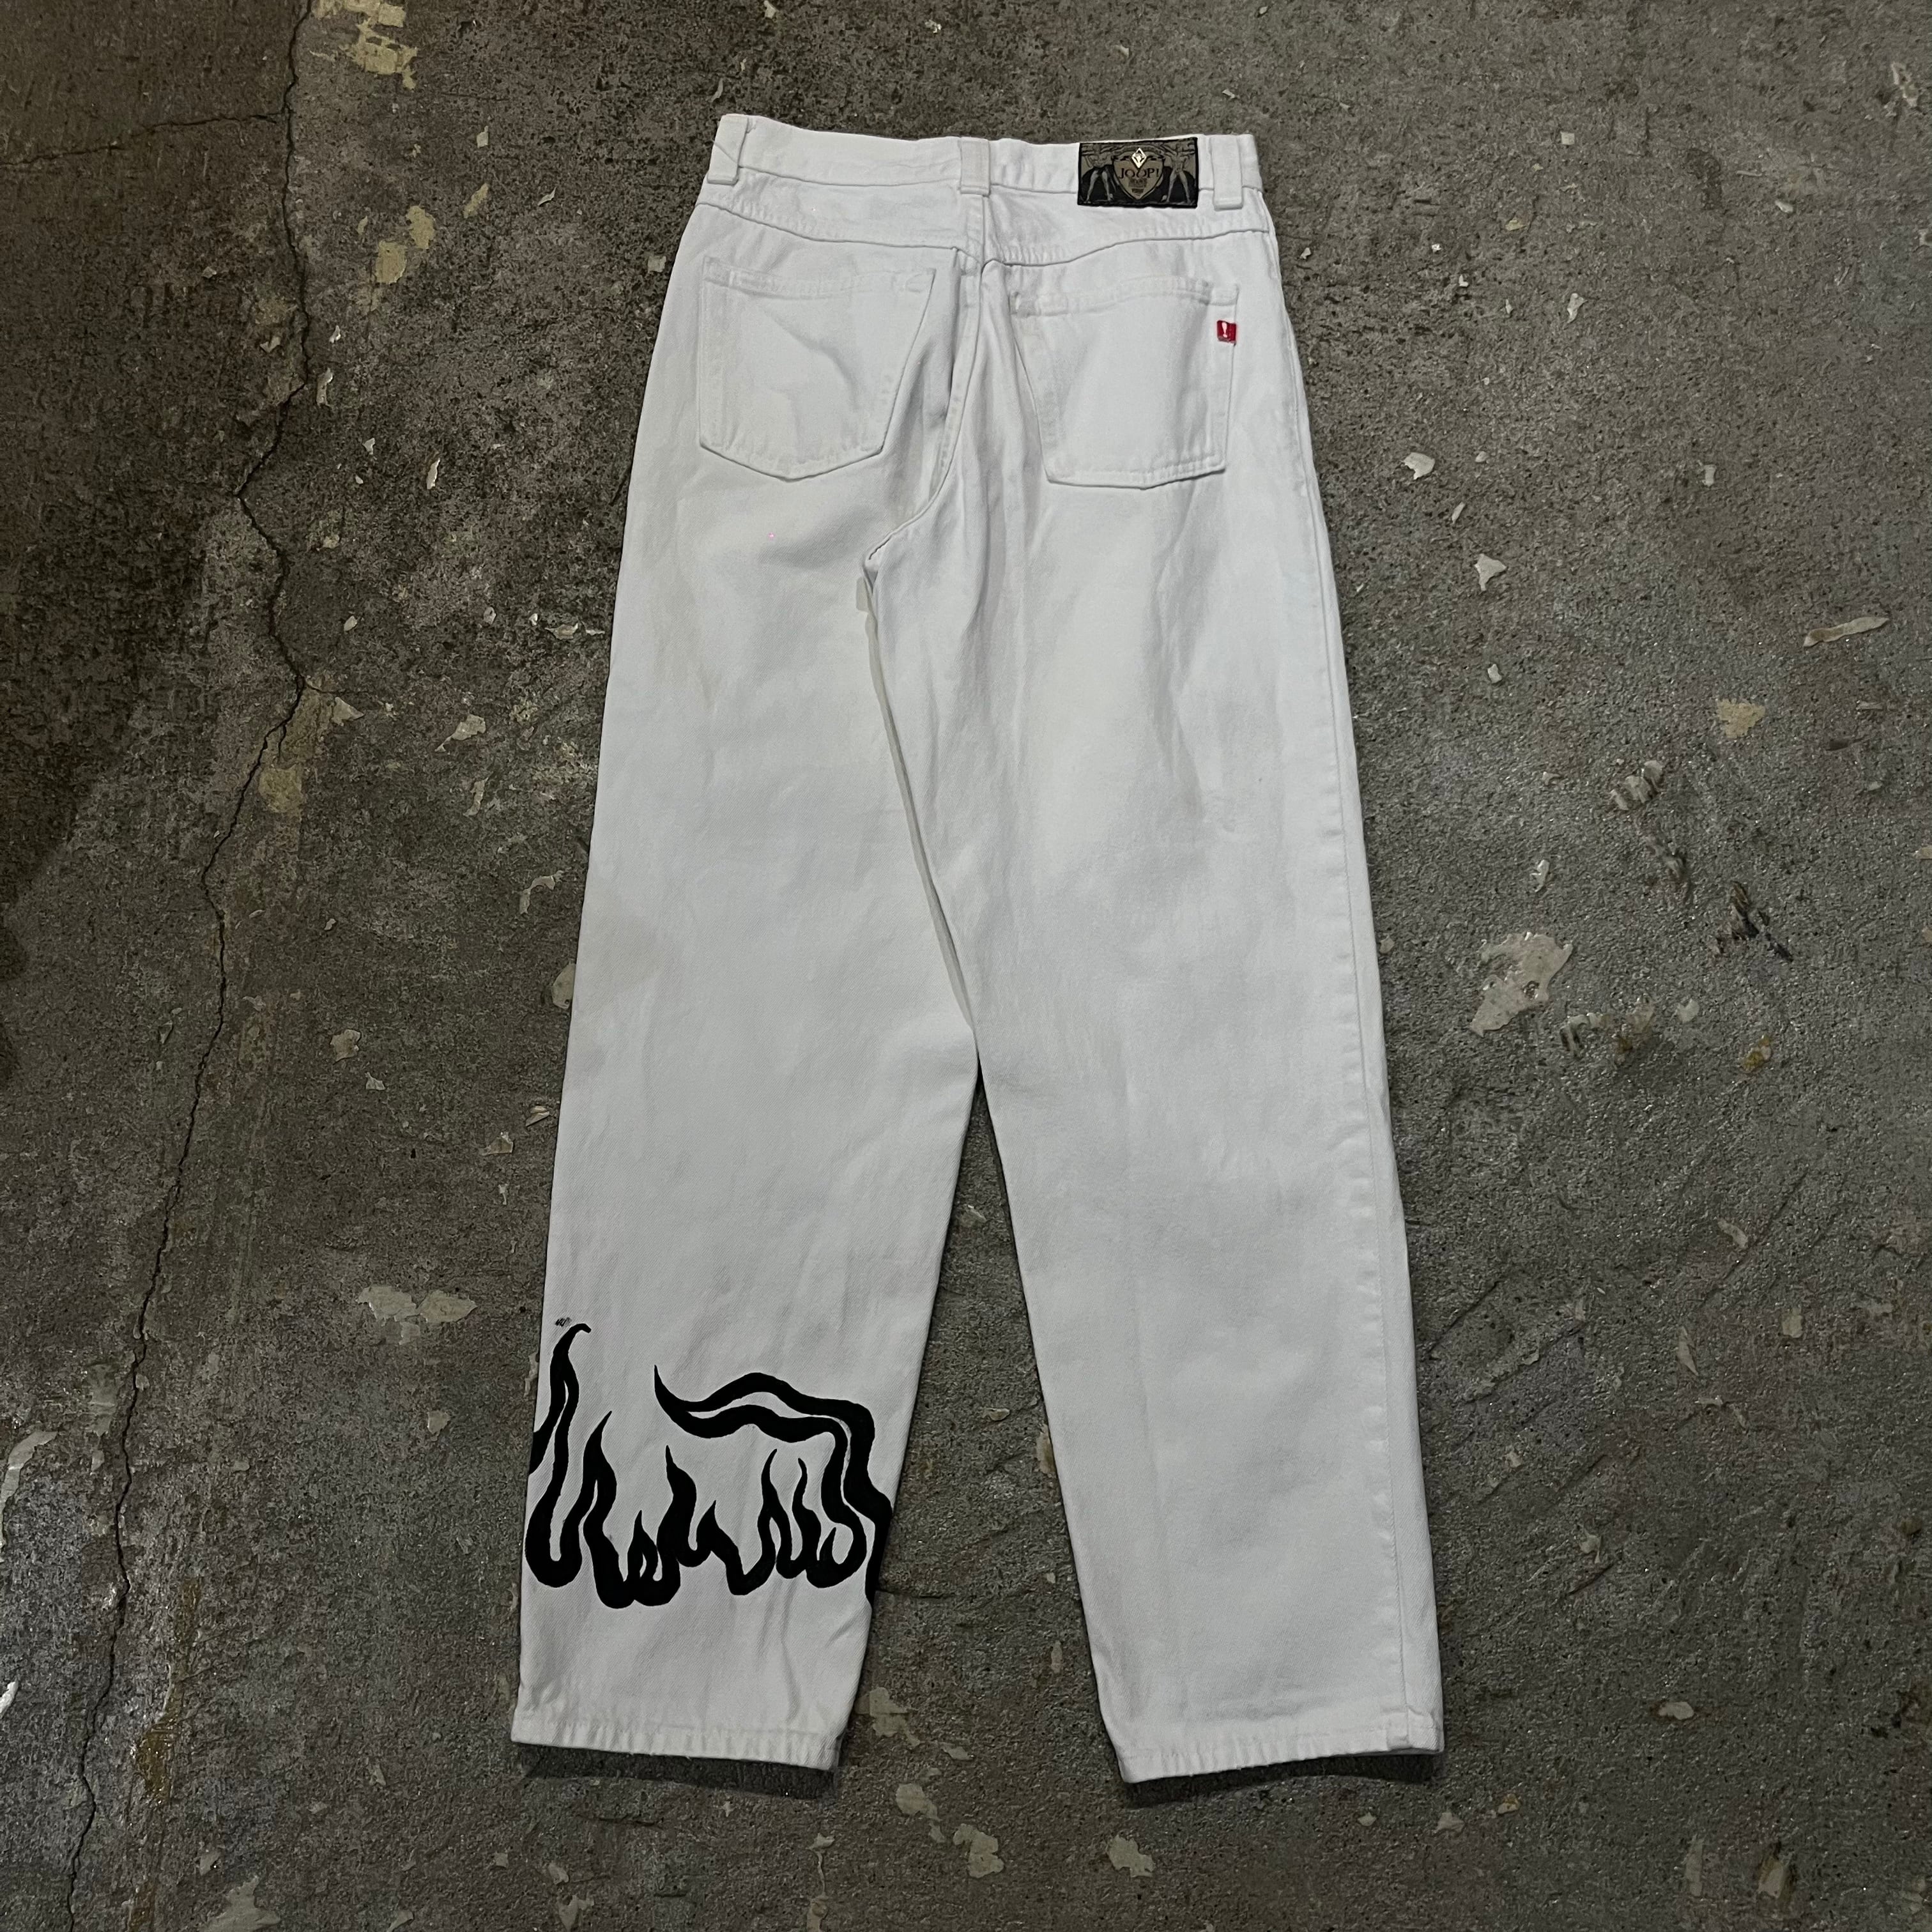 JOOP! Jeans hand paint white denim pants【仙台店】 | What'z up